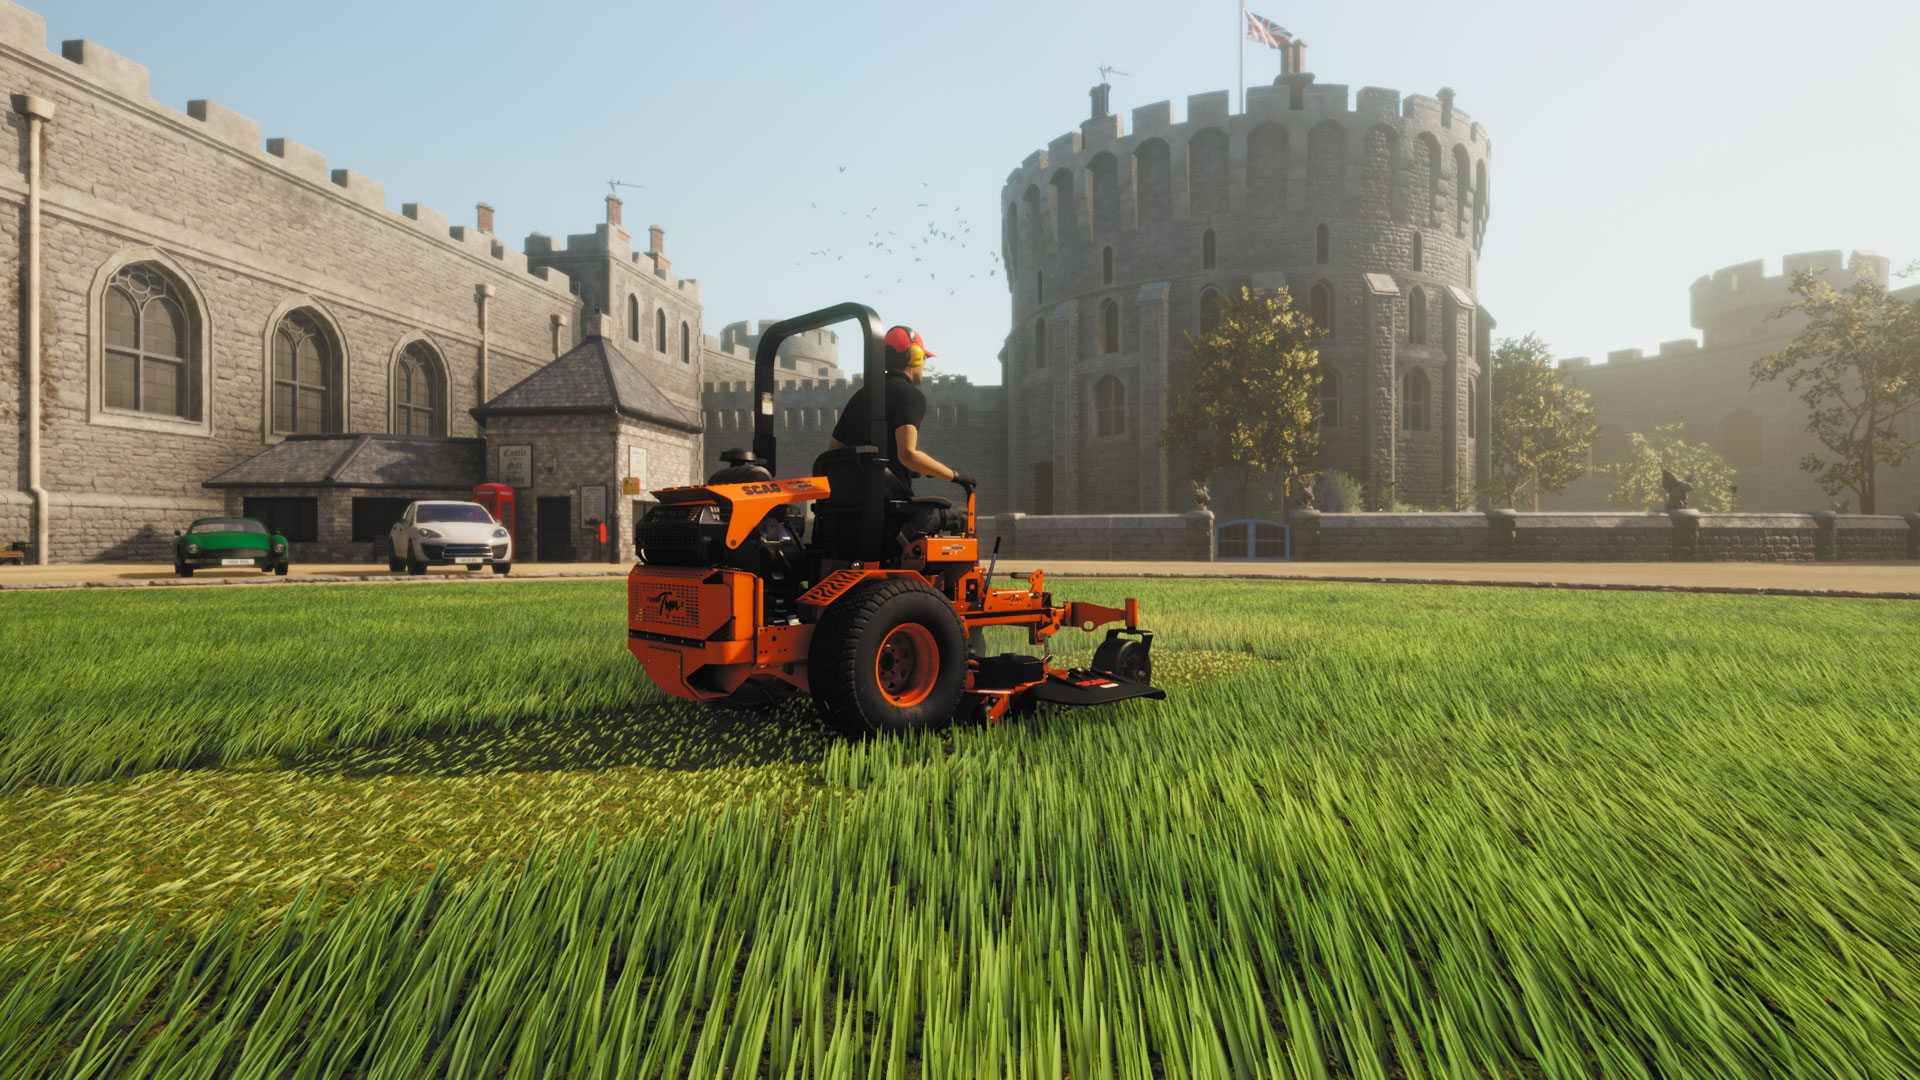 Lawn Mowing Simulator Xbox